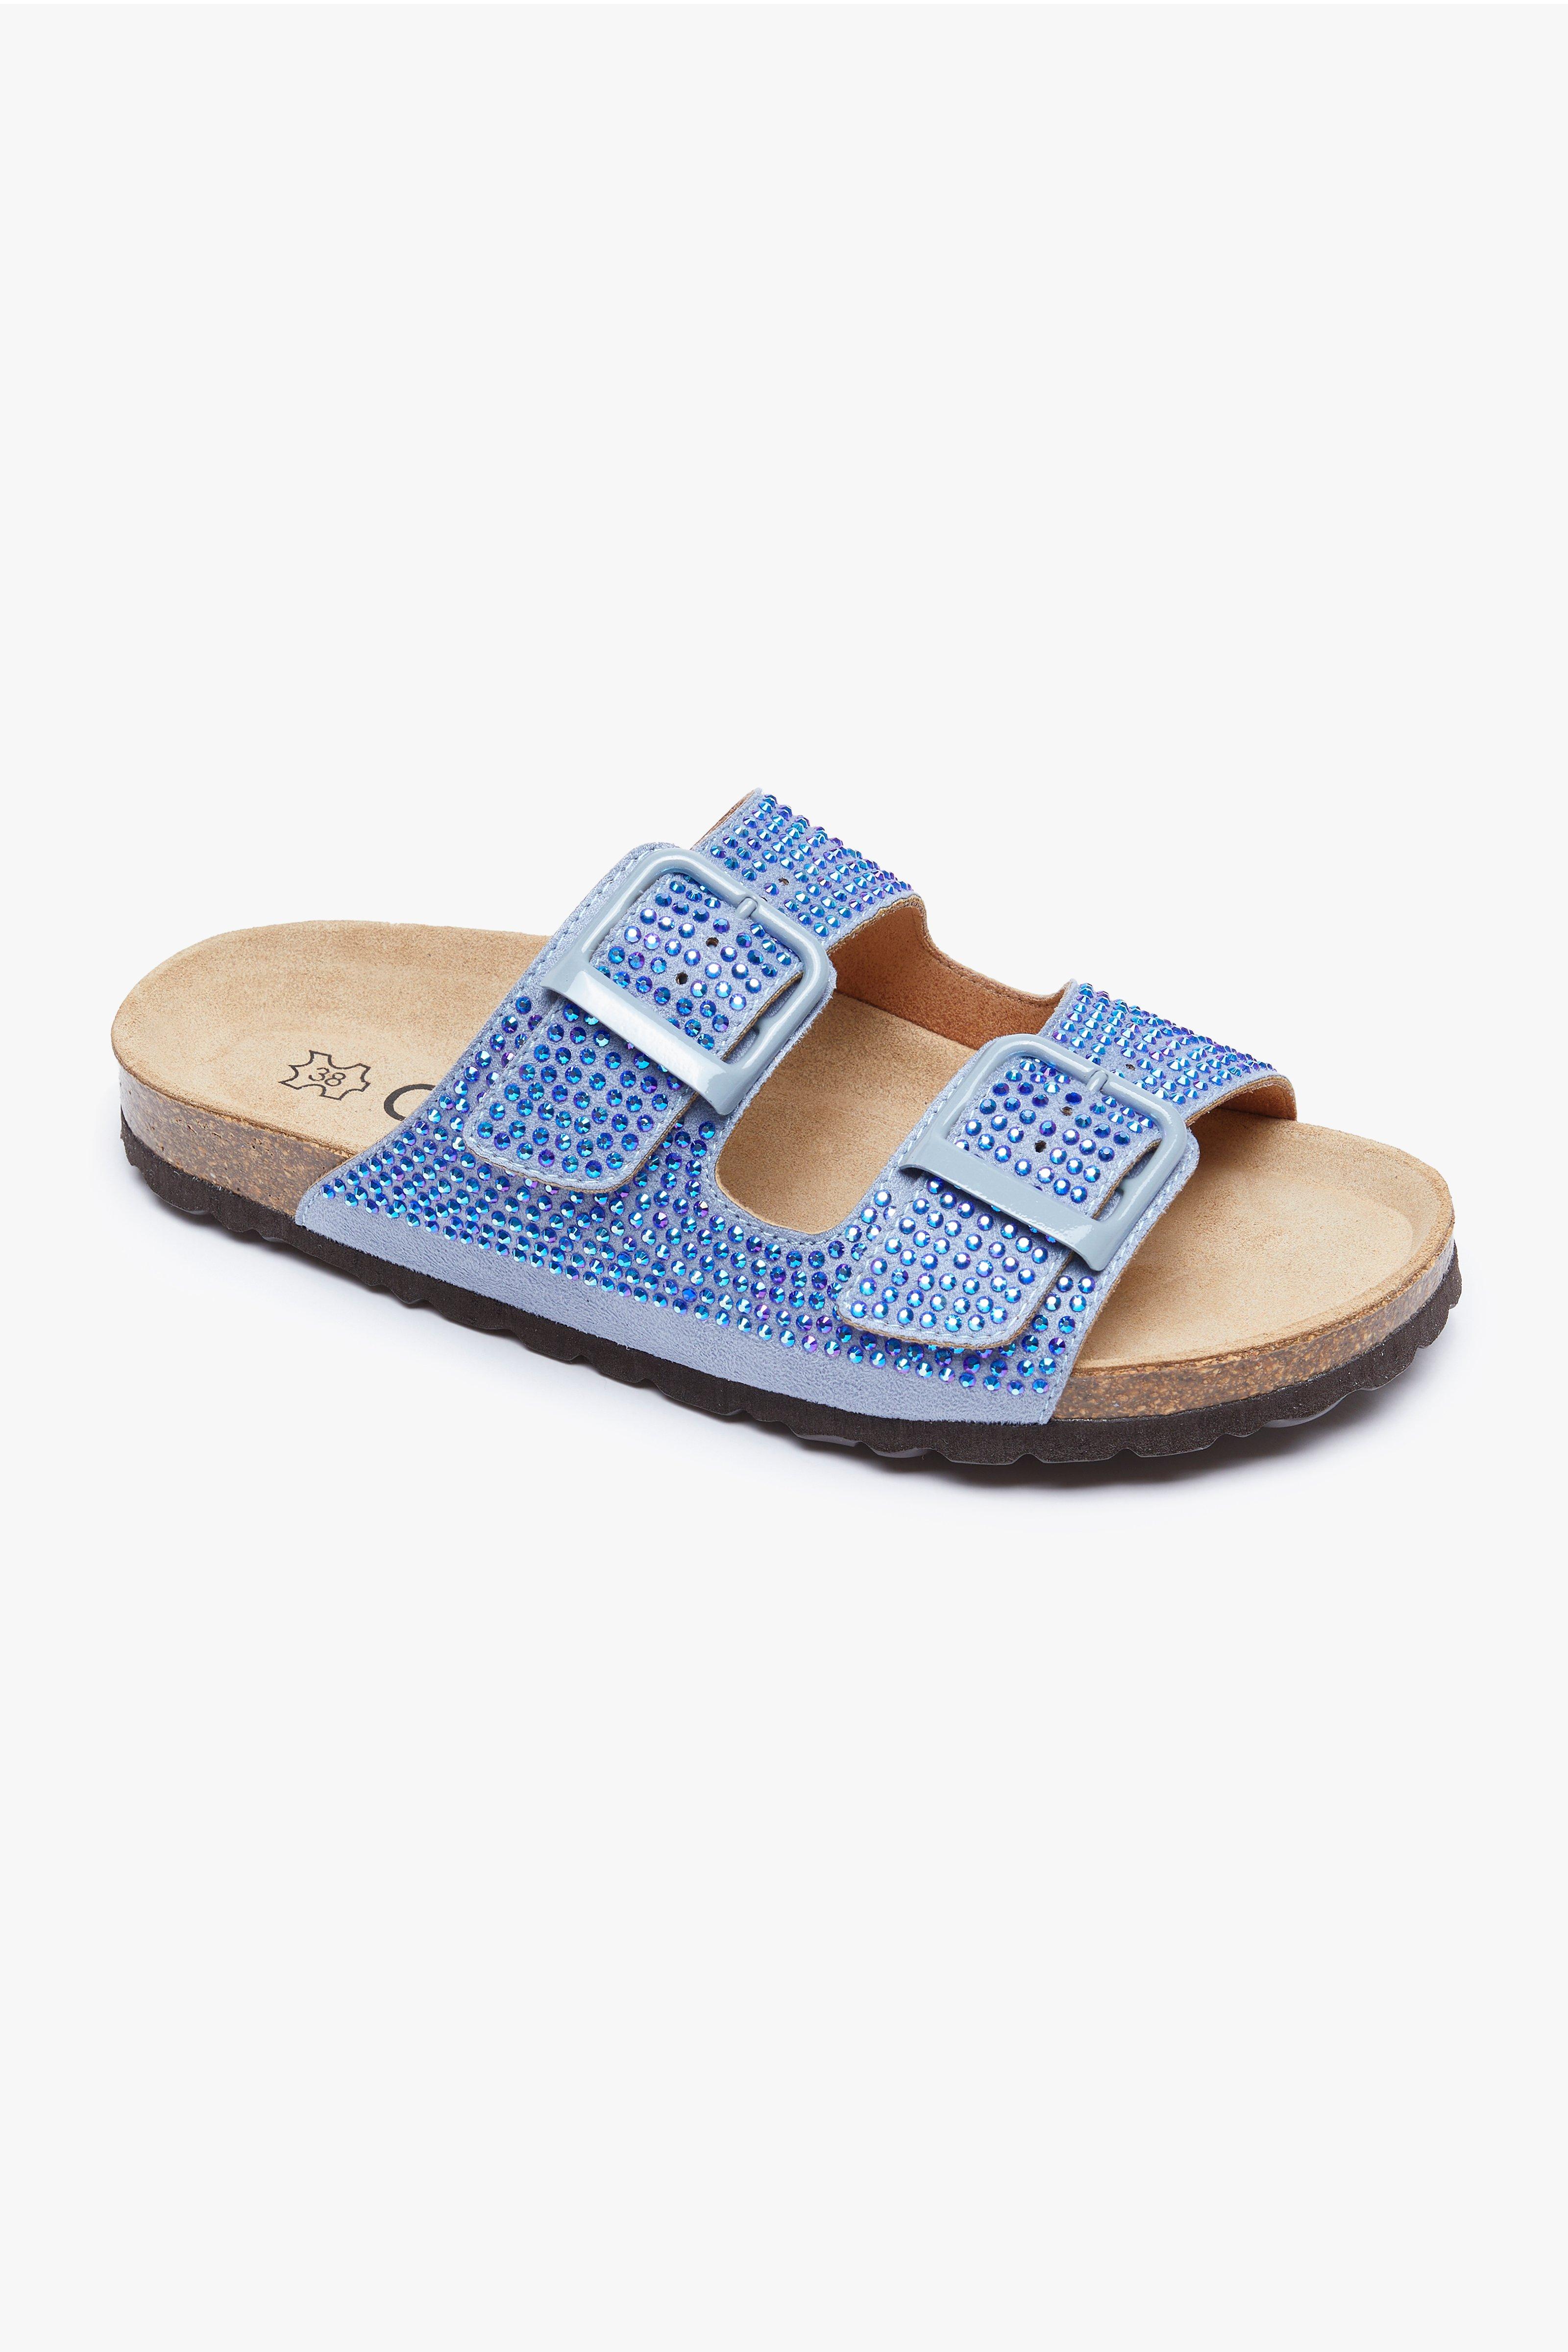 CKS Dames - KELLY - sandalen - blauw